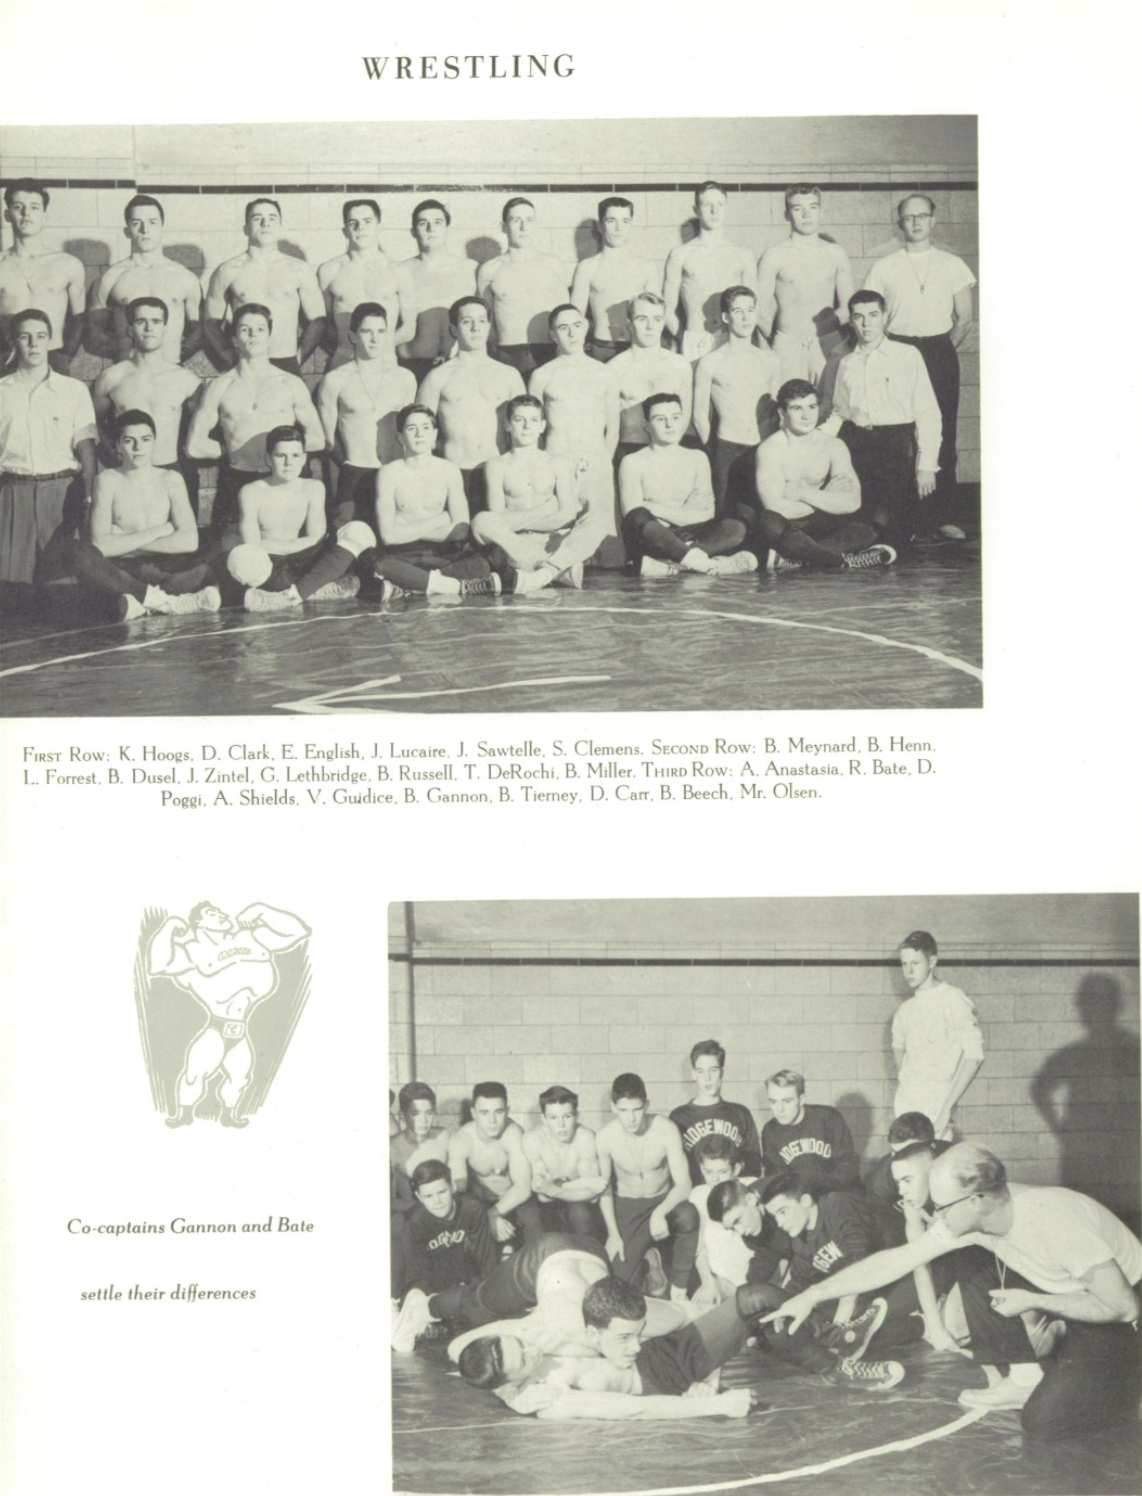 1957 Boys’ Wrestling Team